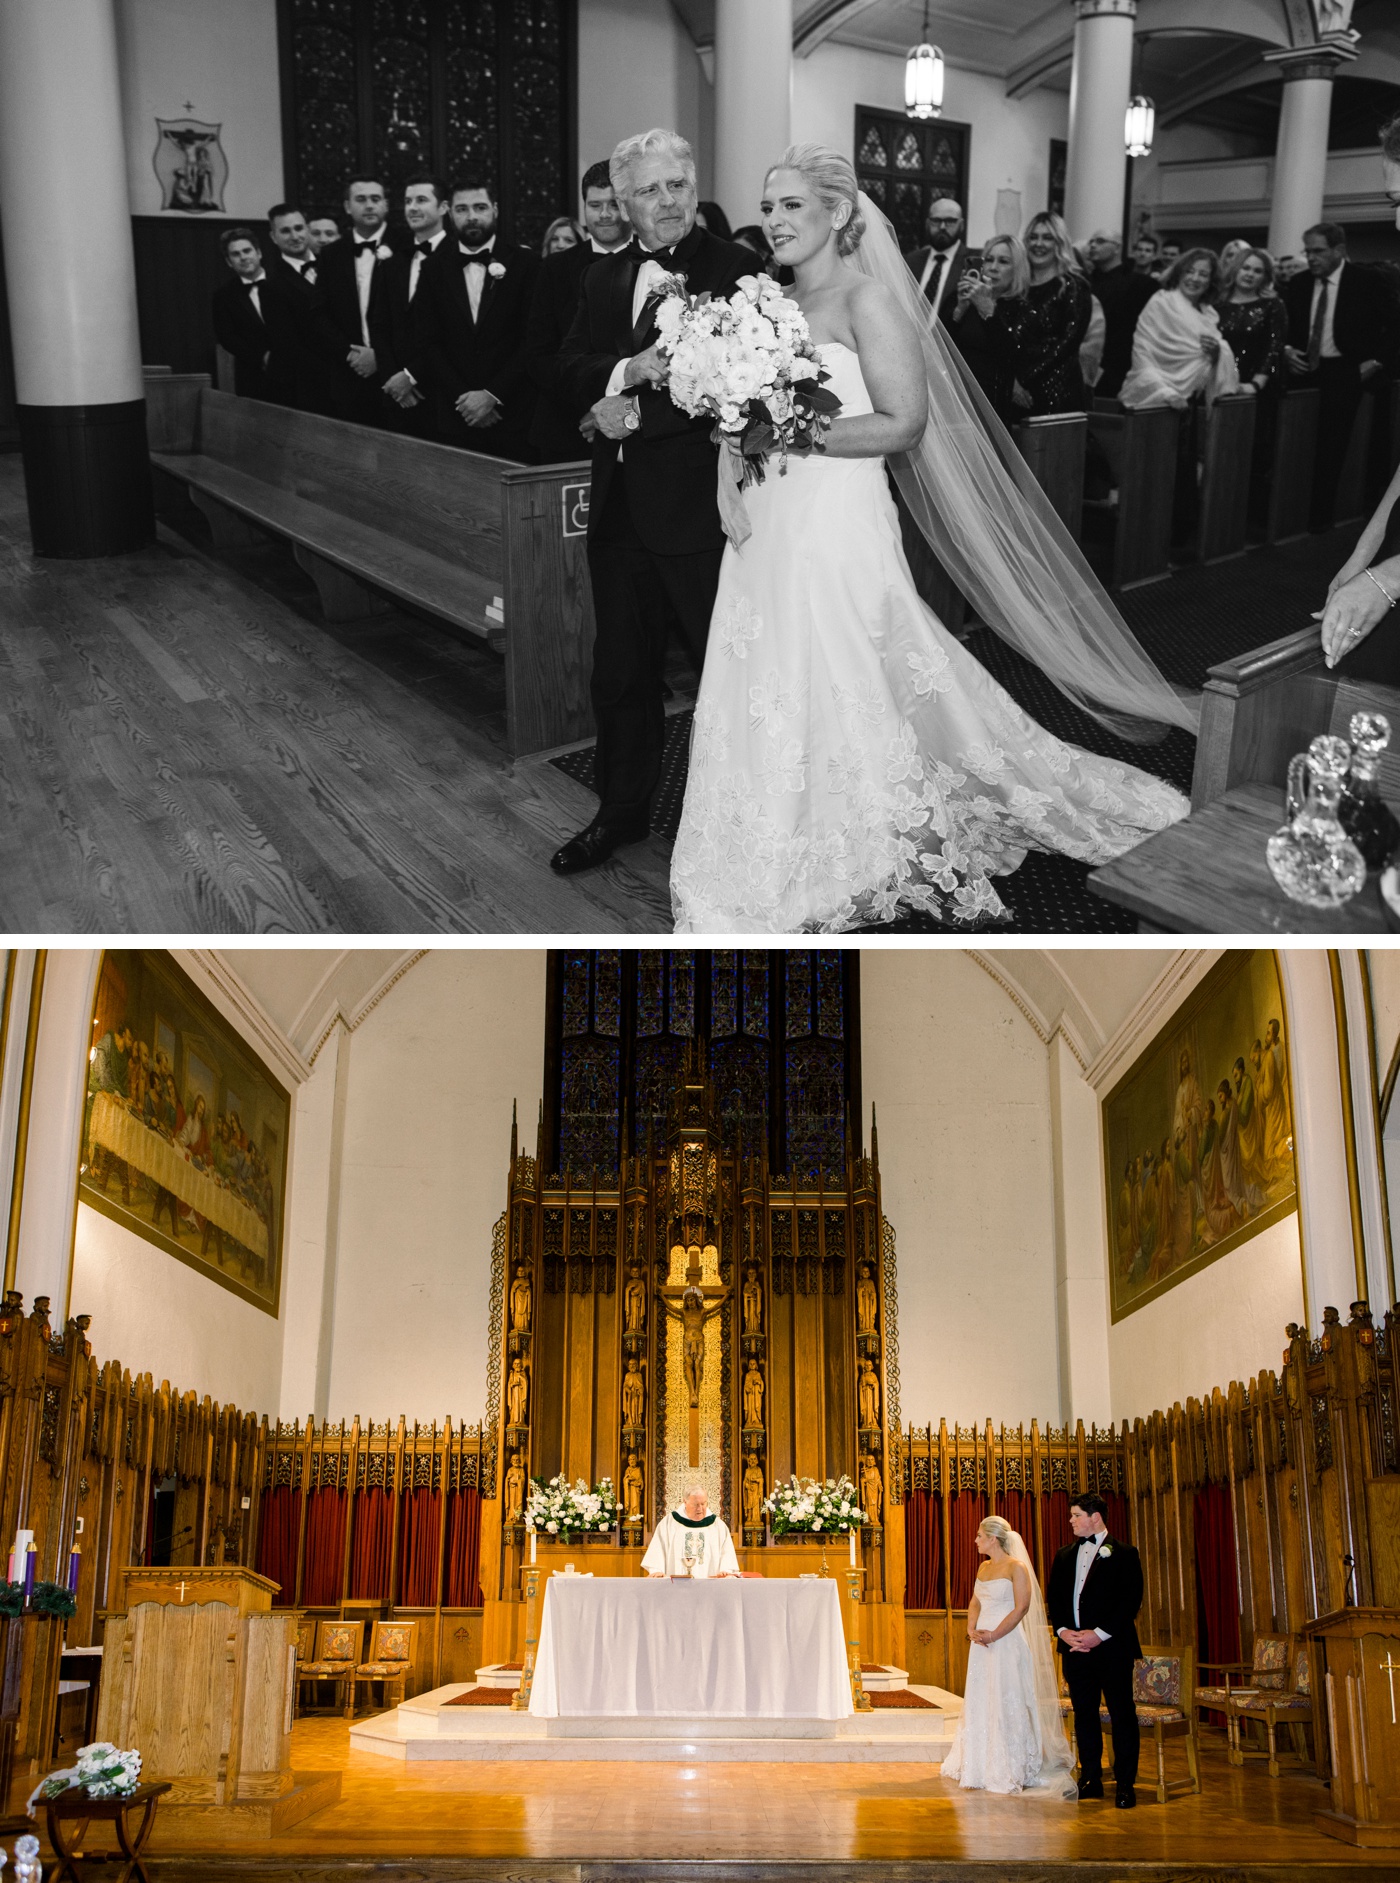 Wedding ceremony at St. Joseph's Catholic Church in Belmont, MA